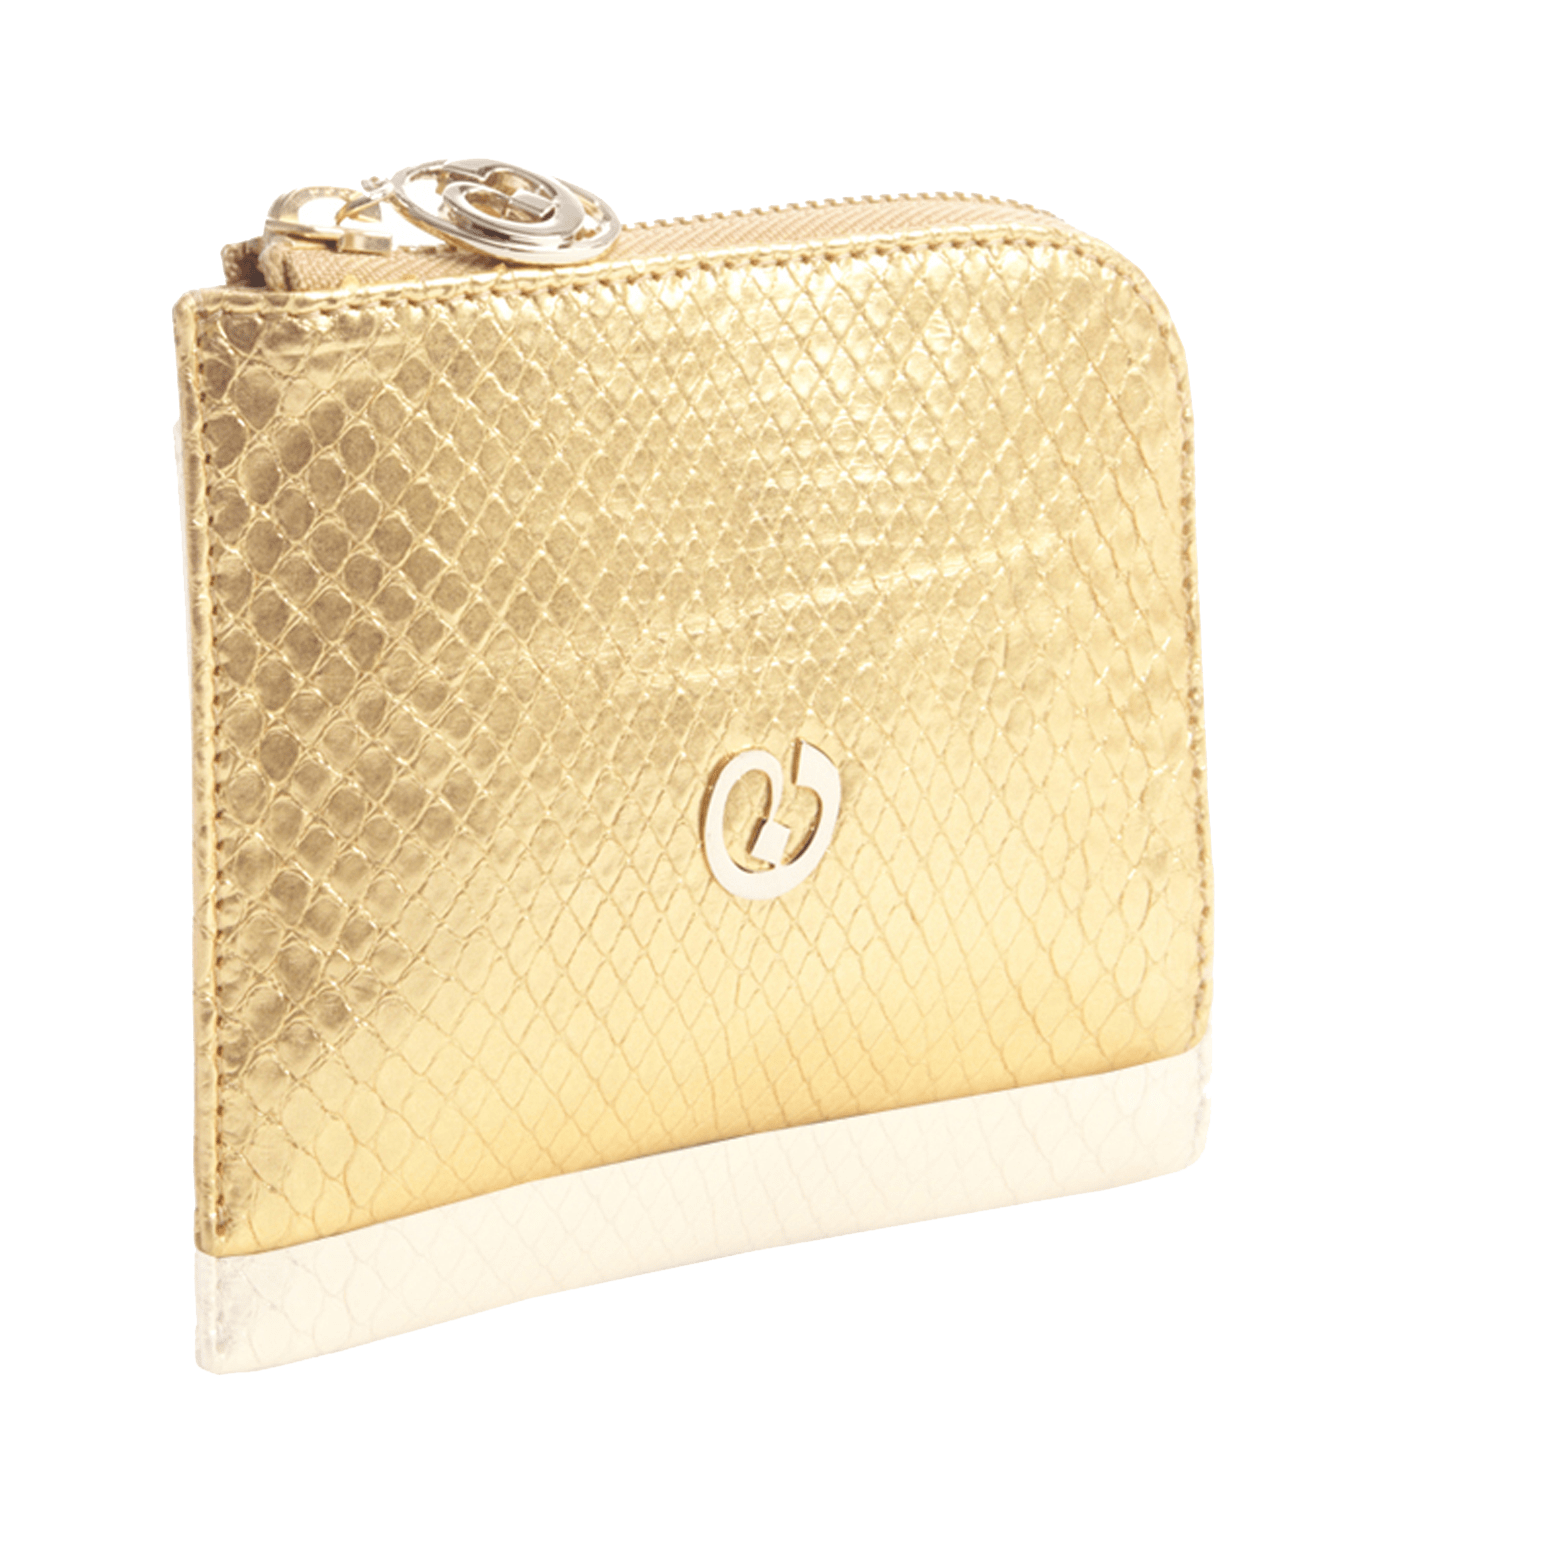 FL by NADA SAWAYA Wallet Gold Small Square Zip-Around Python Wallet